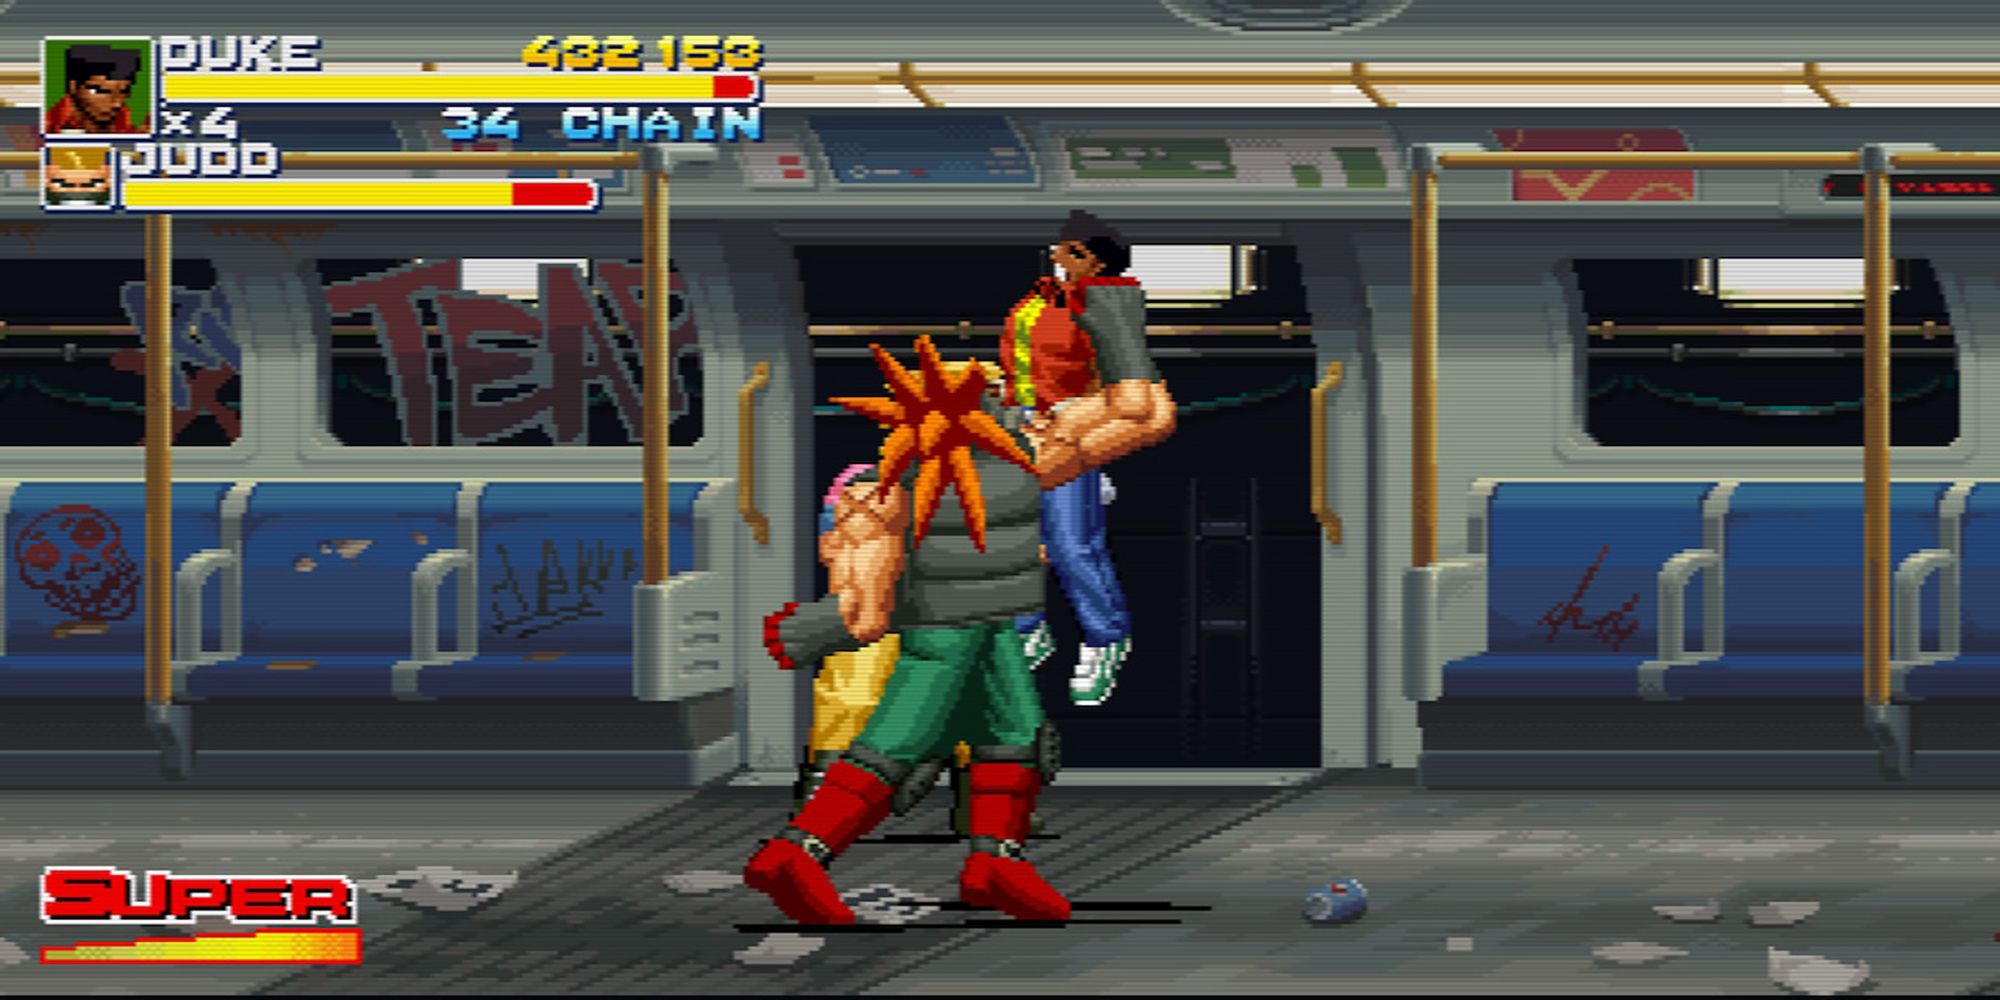 Diesel chokeholds Duke in a subway car brawl in Final Vendetta.